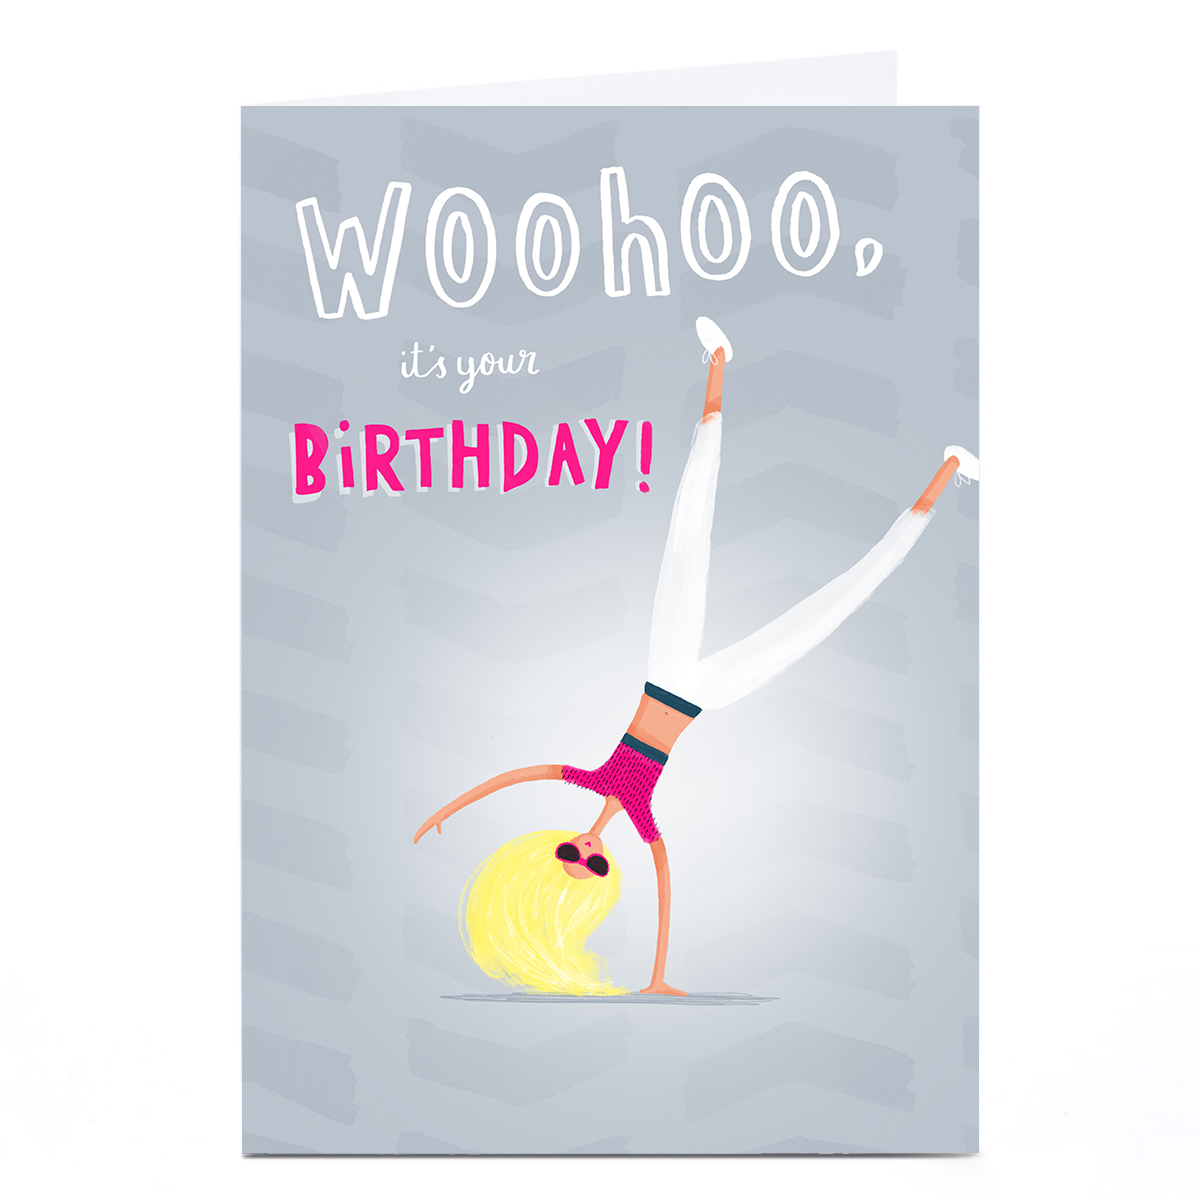 Personalised Andrew Thornton Birthday Card - Woohoo